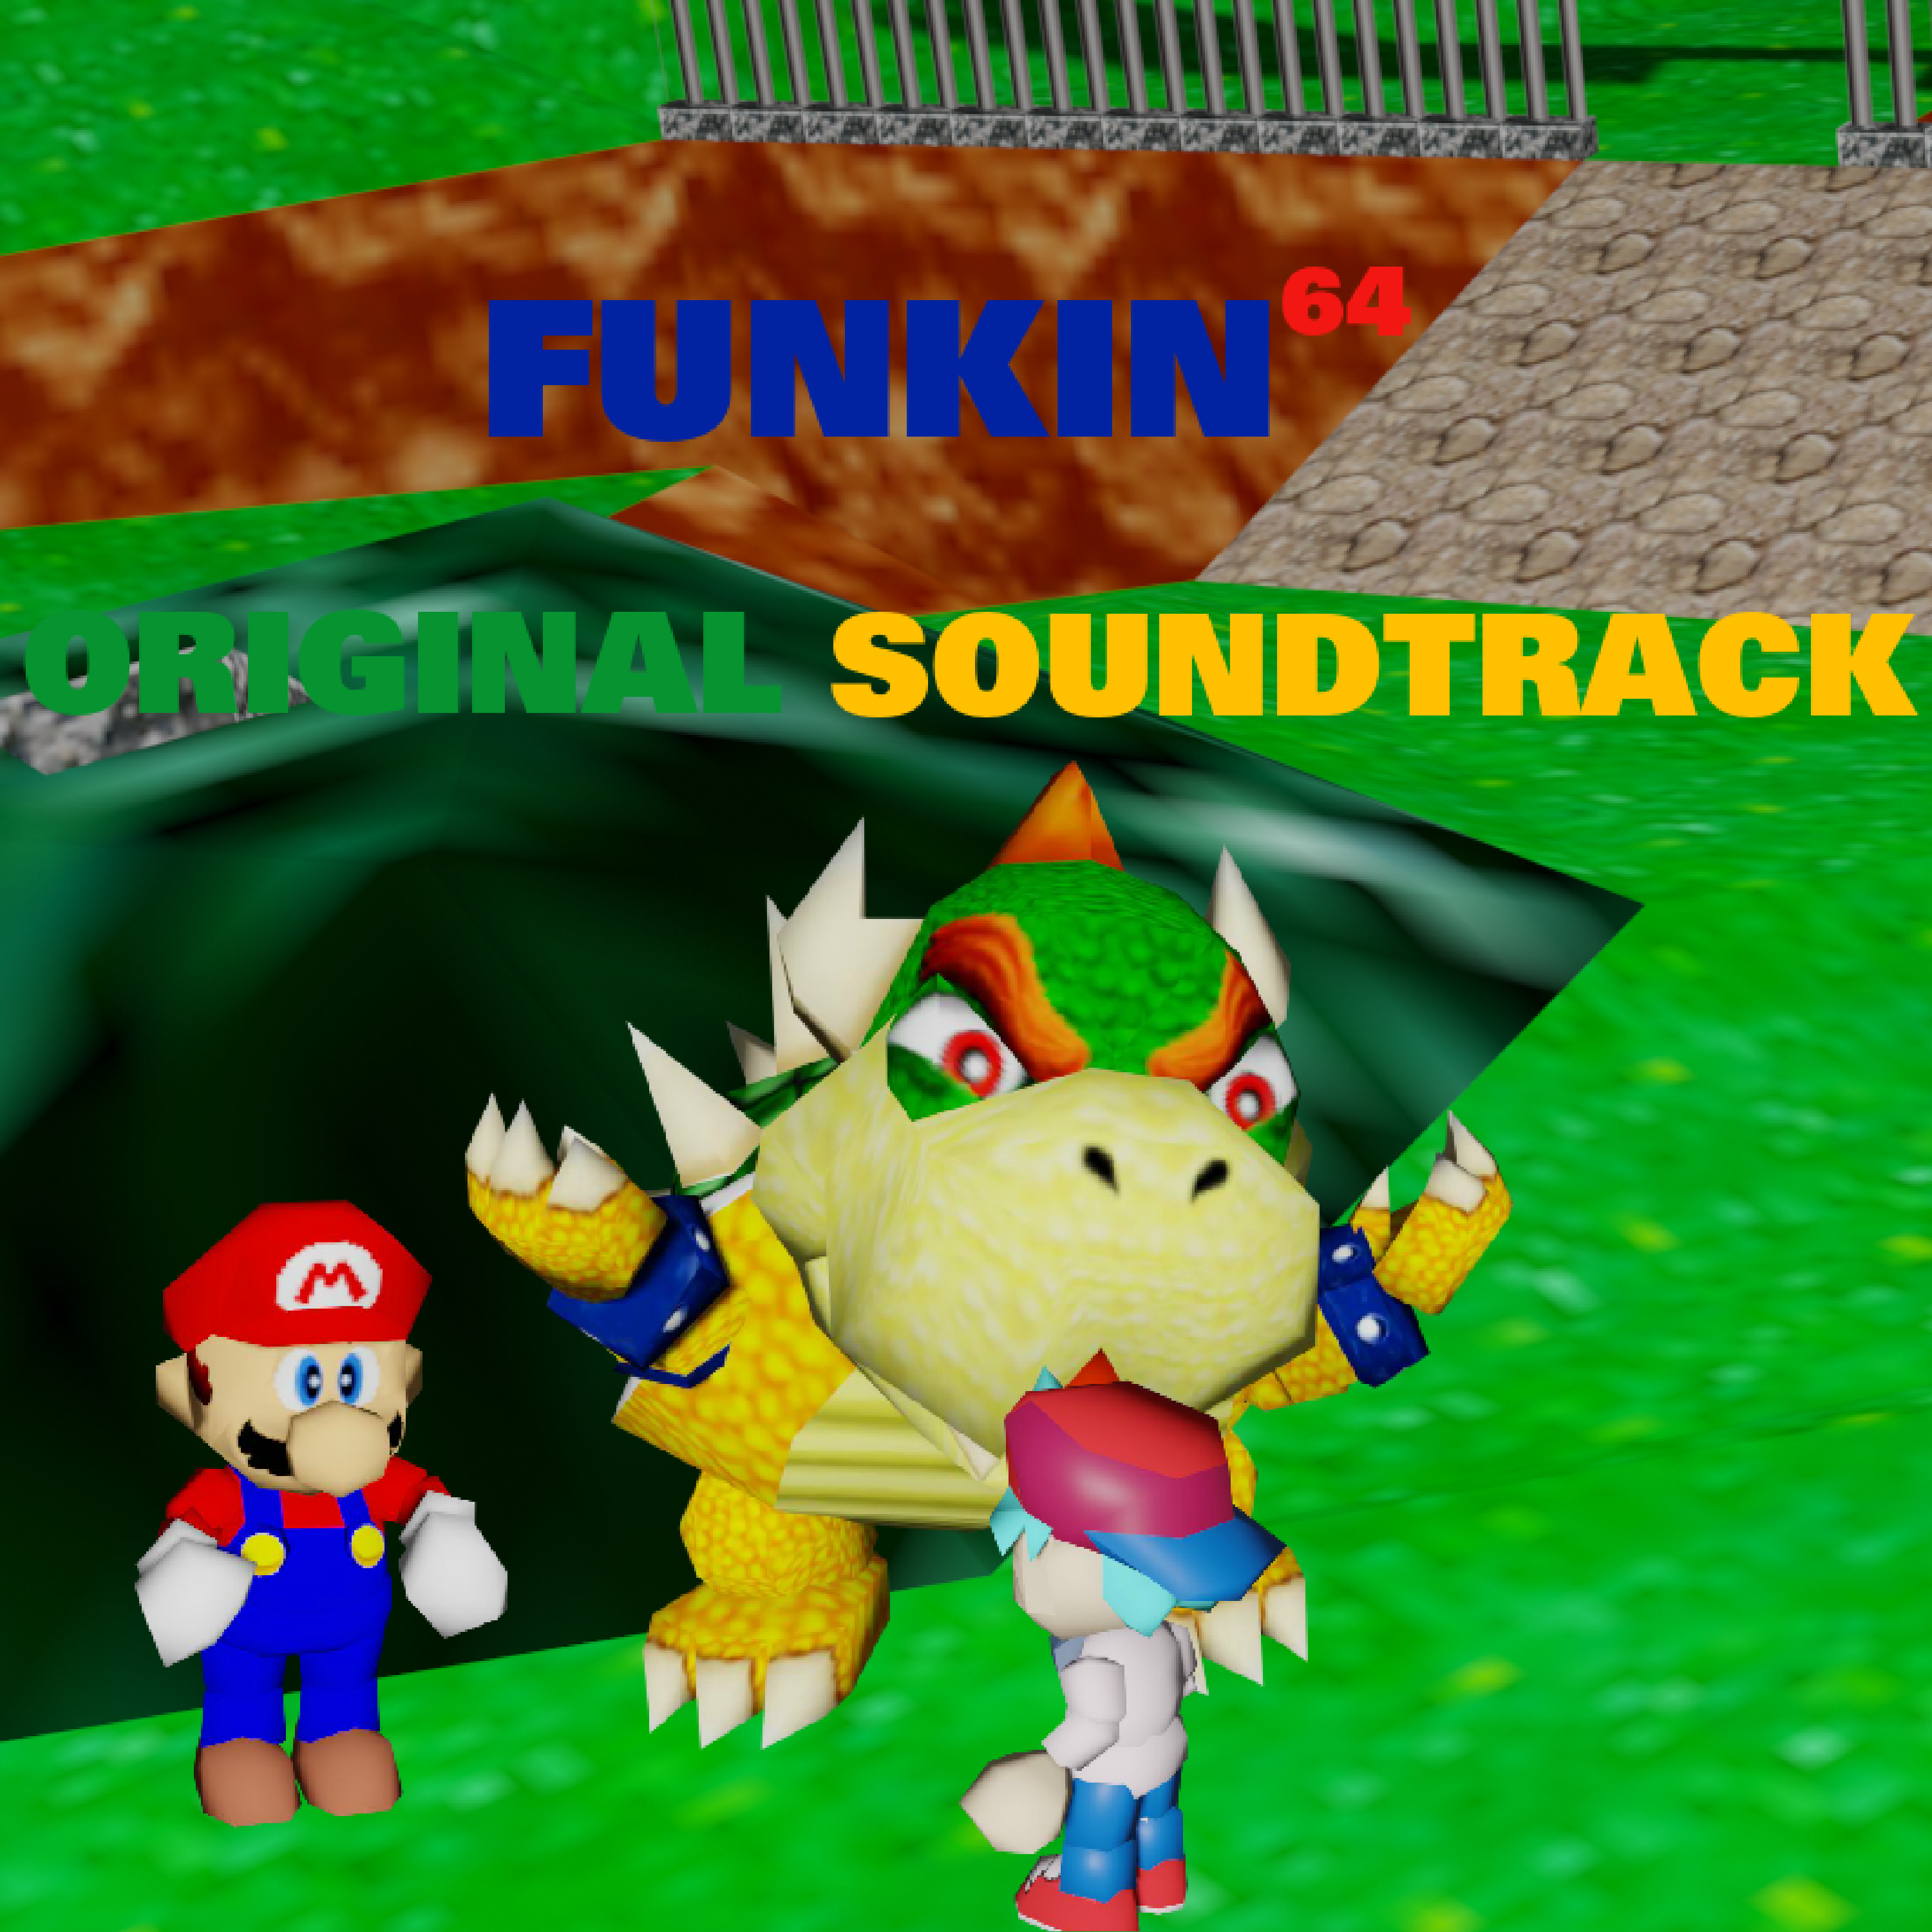 Friday Night Funkin' - Phantom Attack OST (Mod) (Windows) (gamerip) (2022)  MP3 - Download Friday Night Funkin' - Phantom Attack OST (Mod) (Windows)  (gamerip) (2022) Soundtracks for FREE!